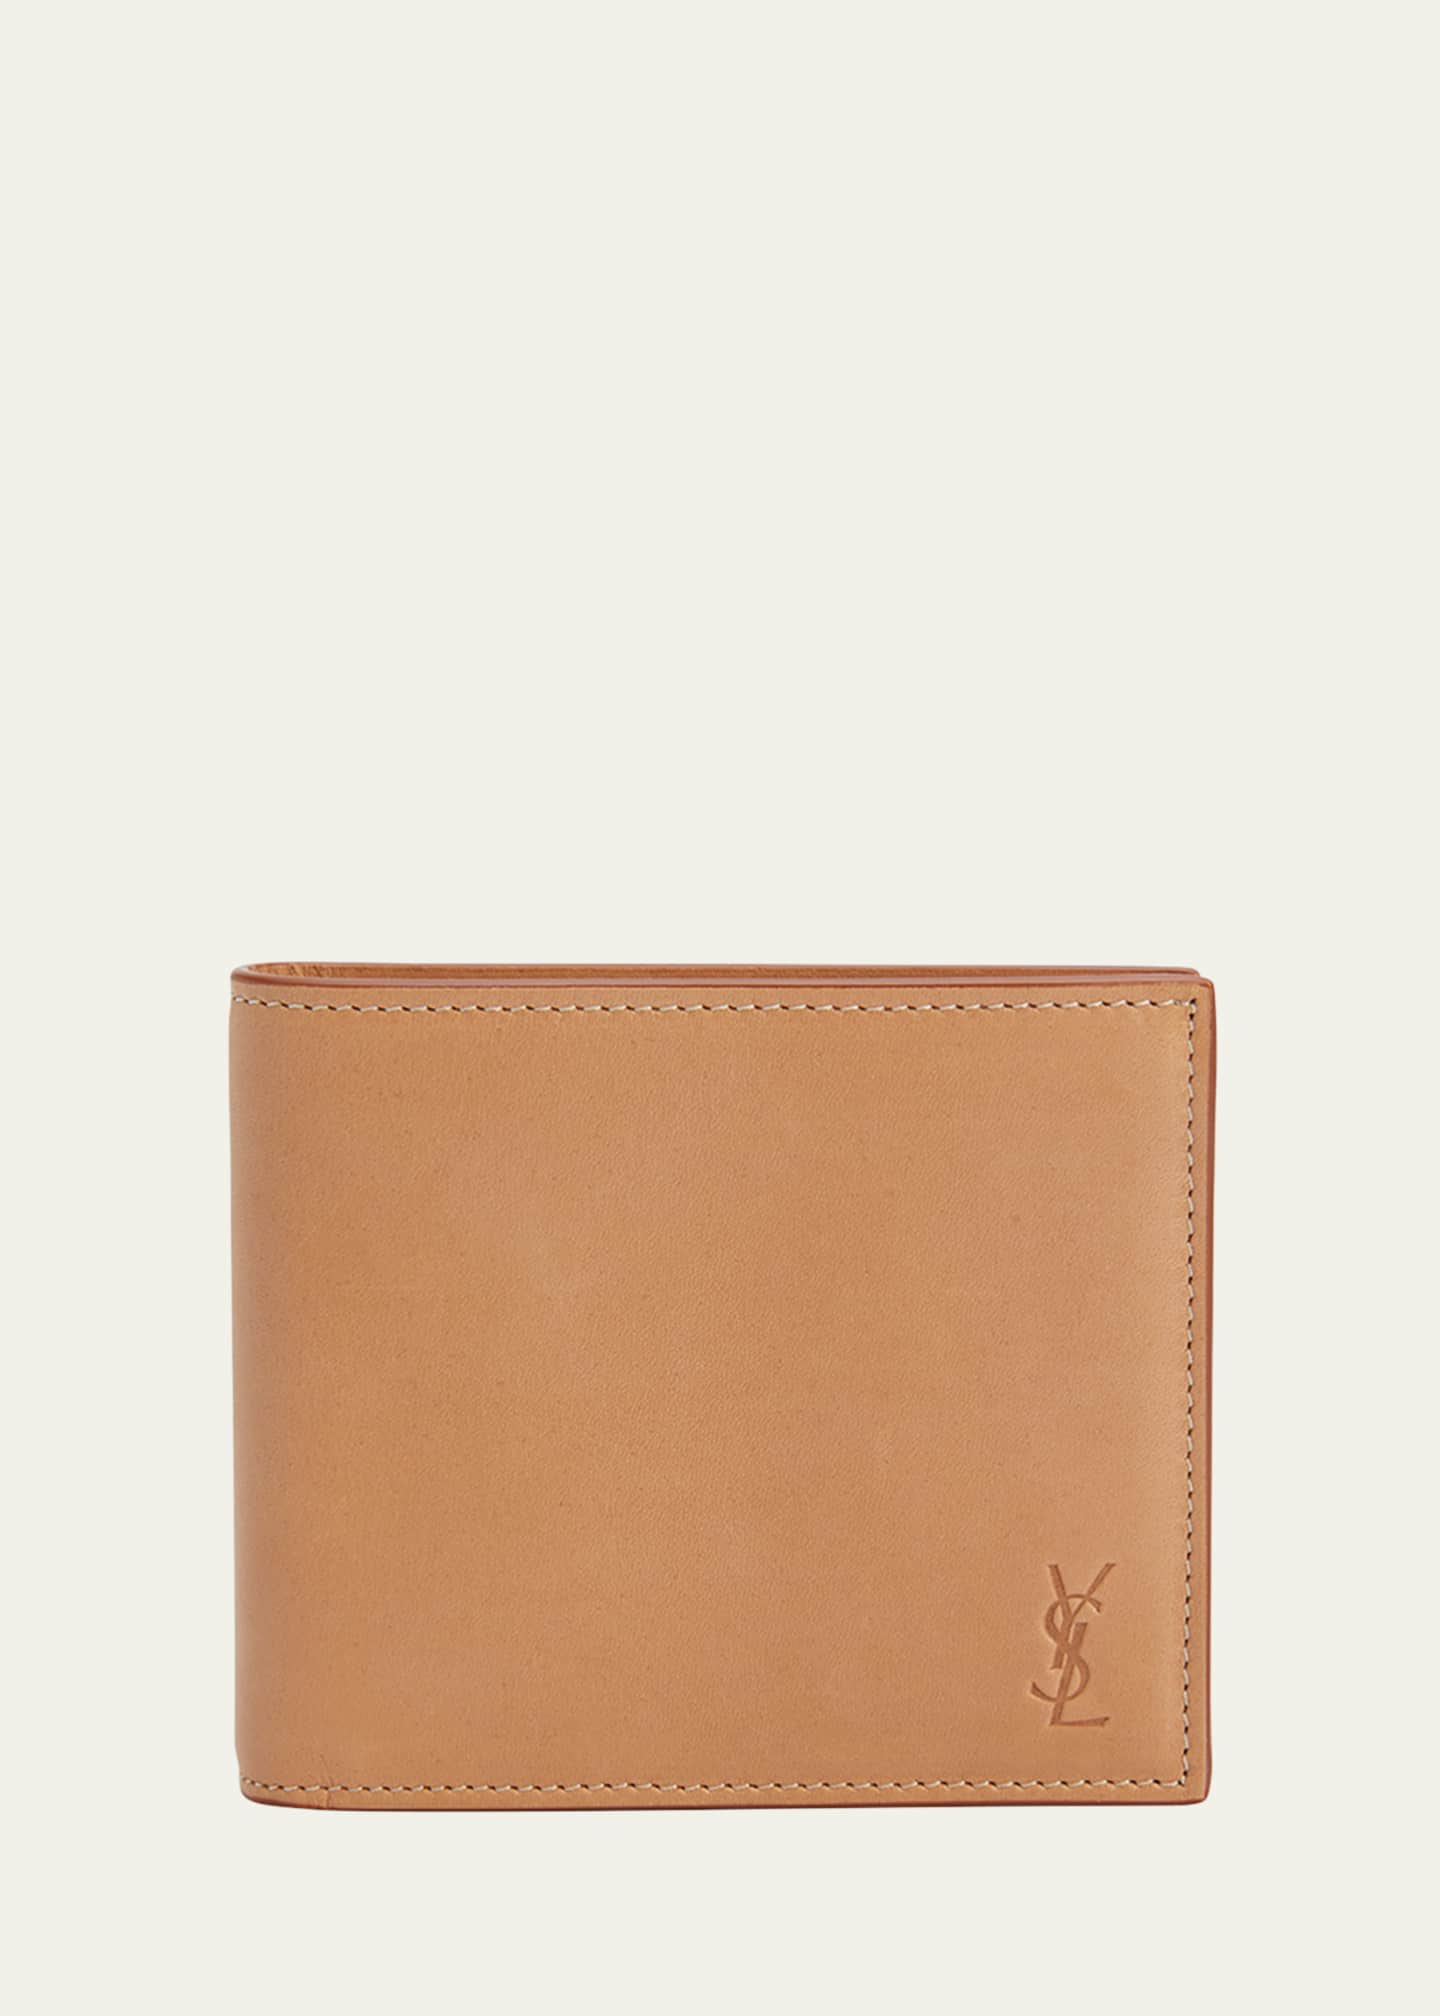 East West Leather Wallet in Brown - Saint Laurent